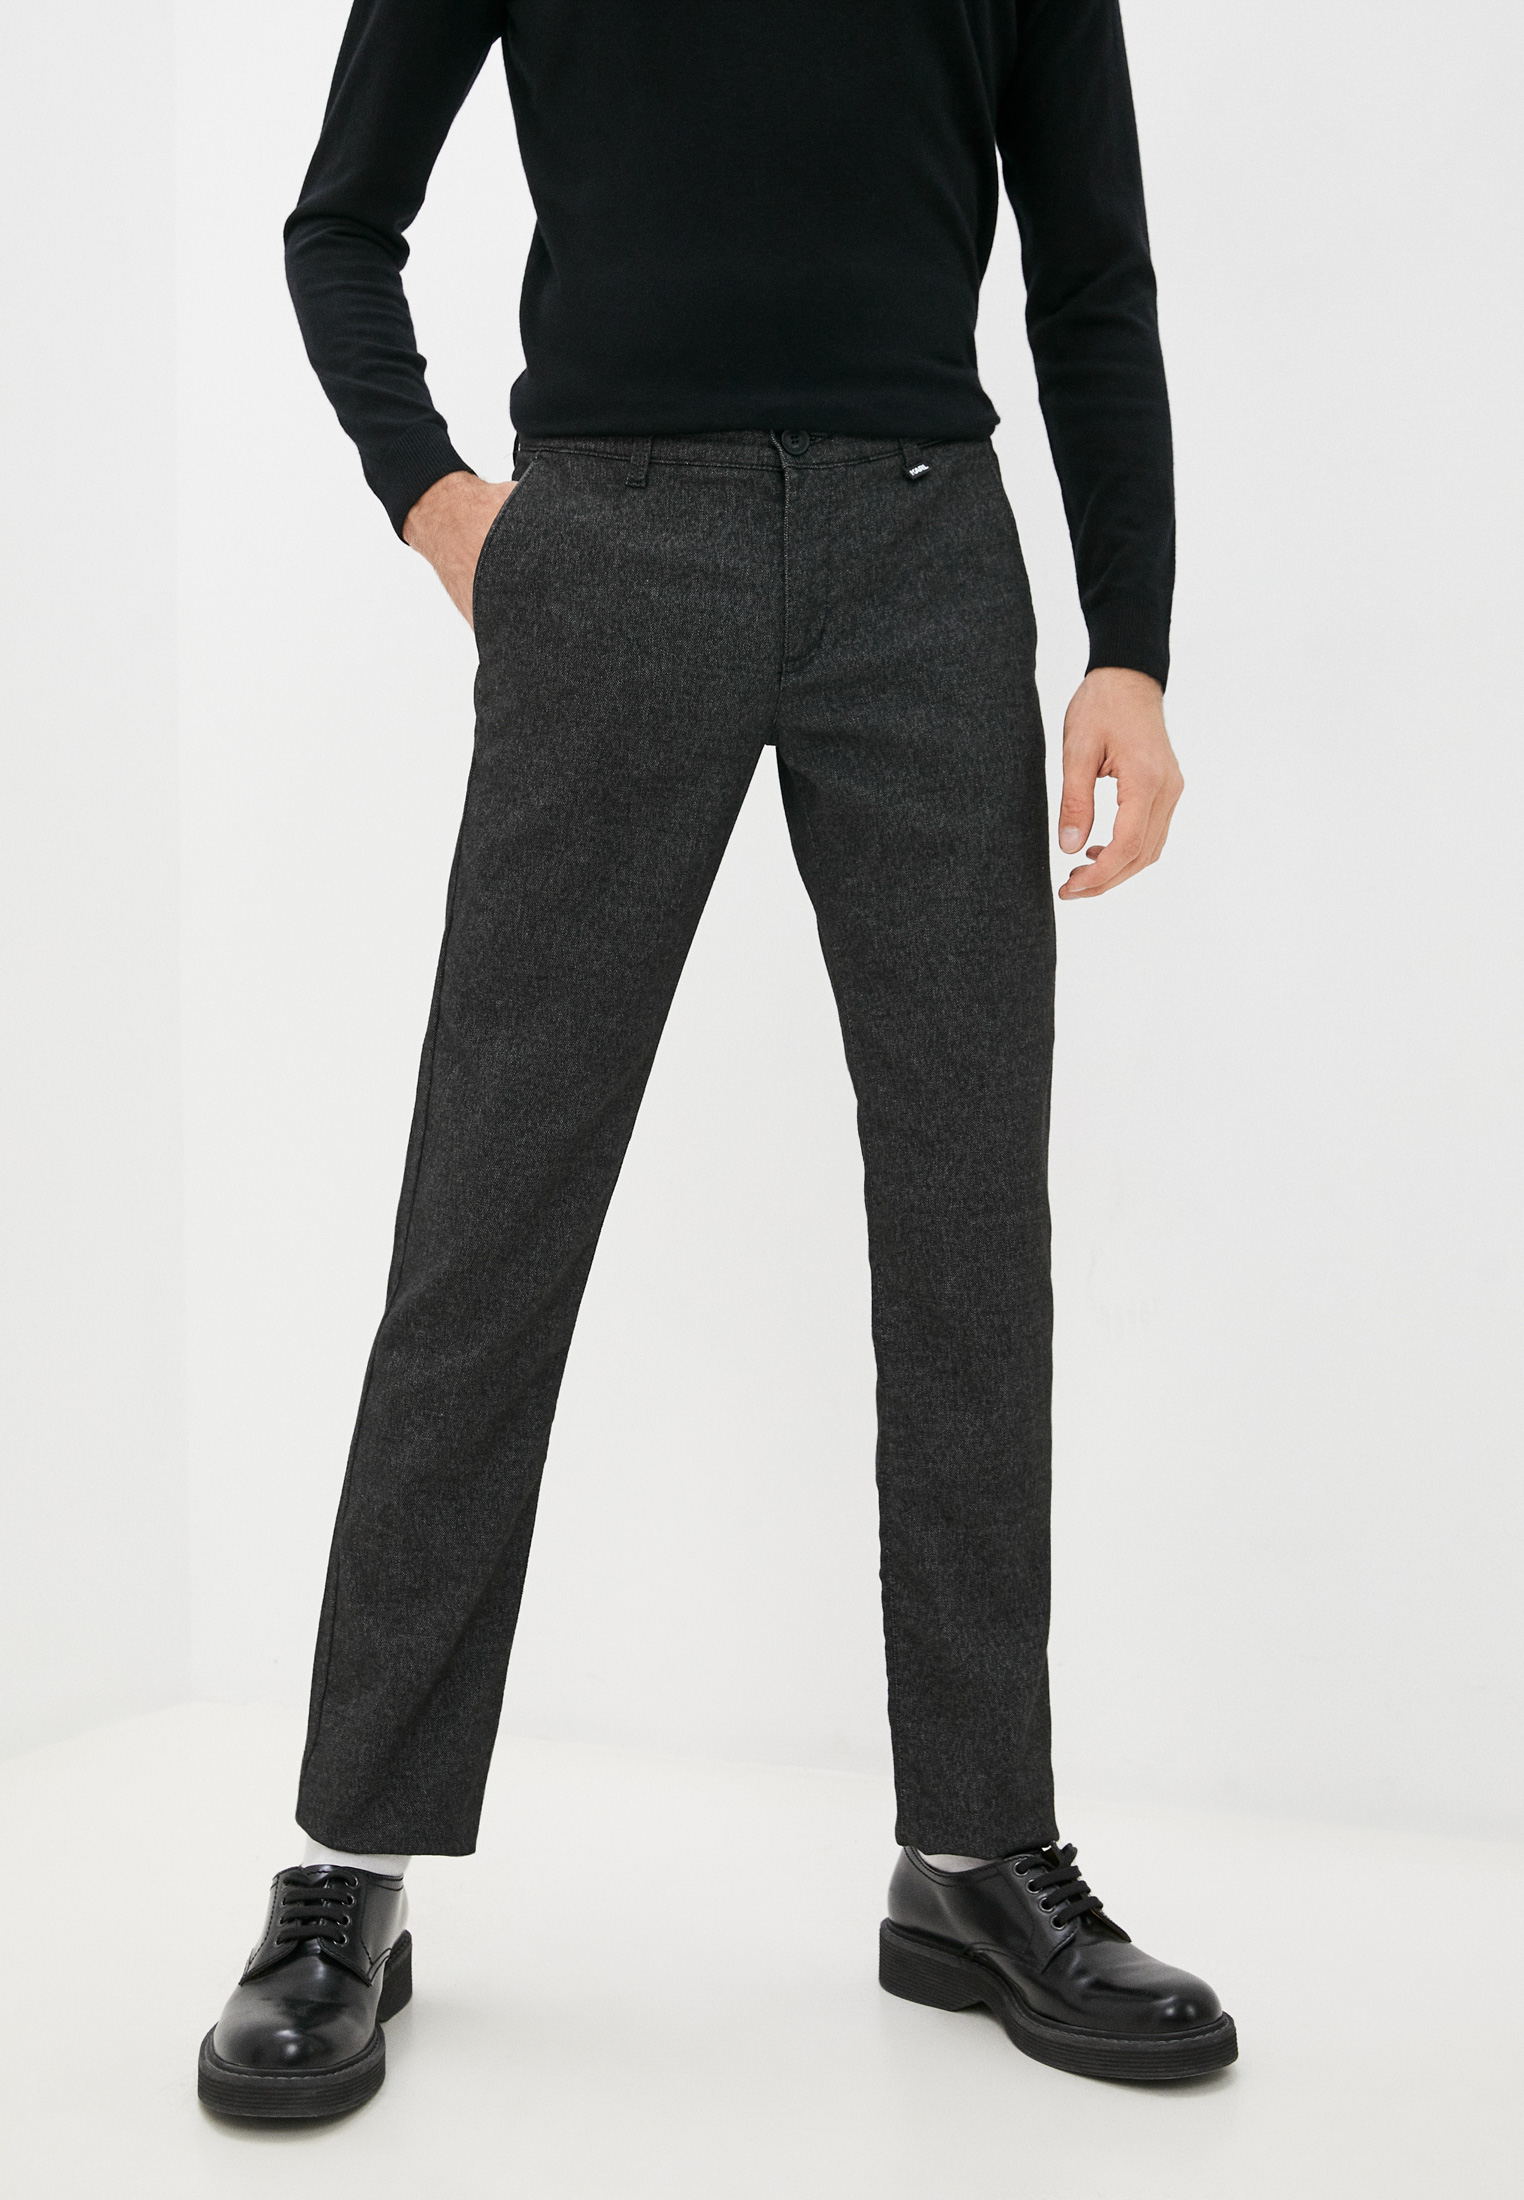 Мужские брюки Karl Lagerfeld (Карл Лагерфельд) 512816-255836: изображение 1